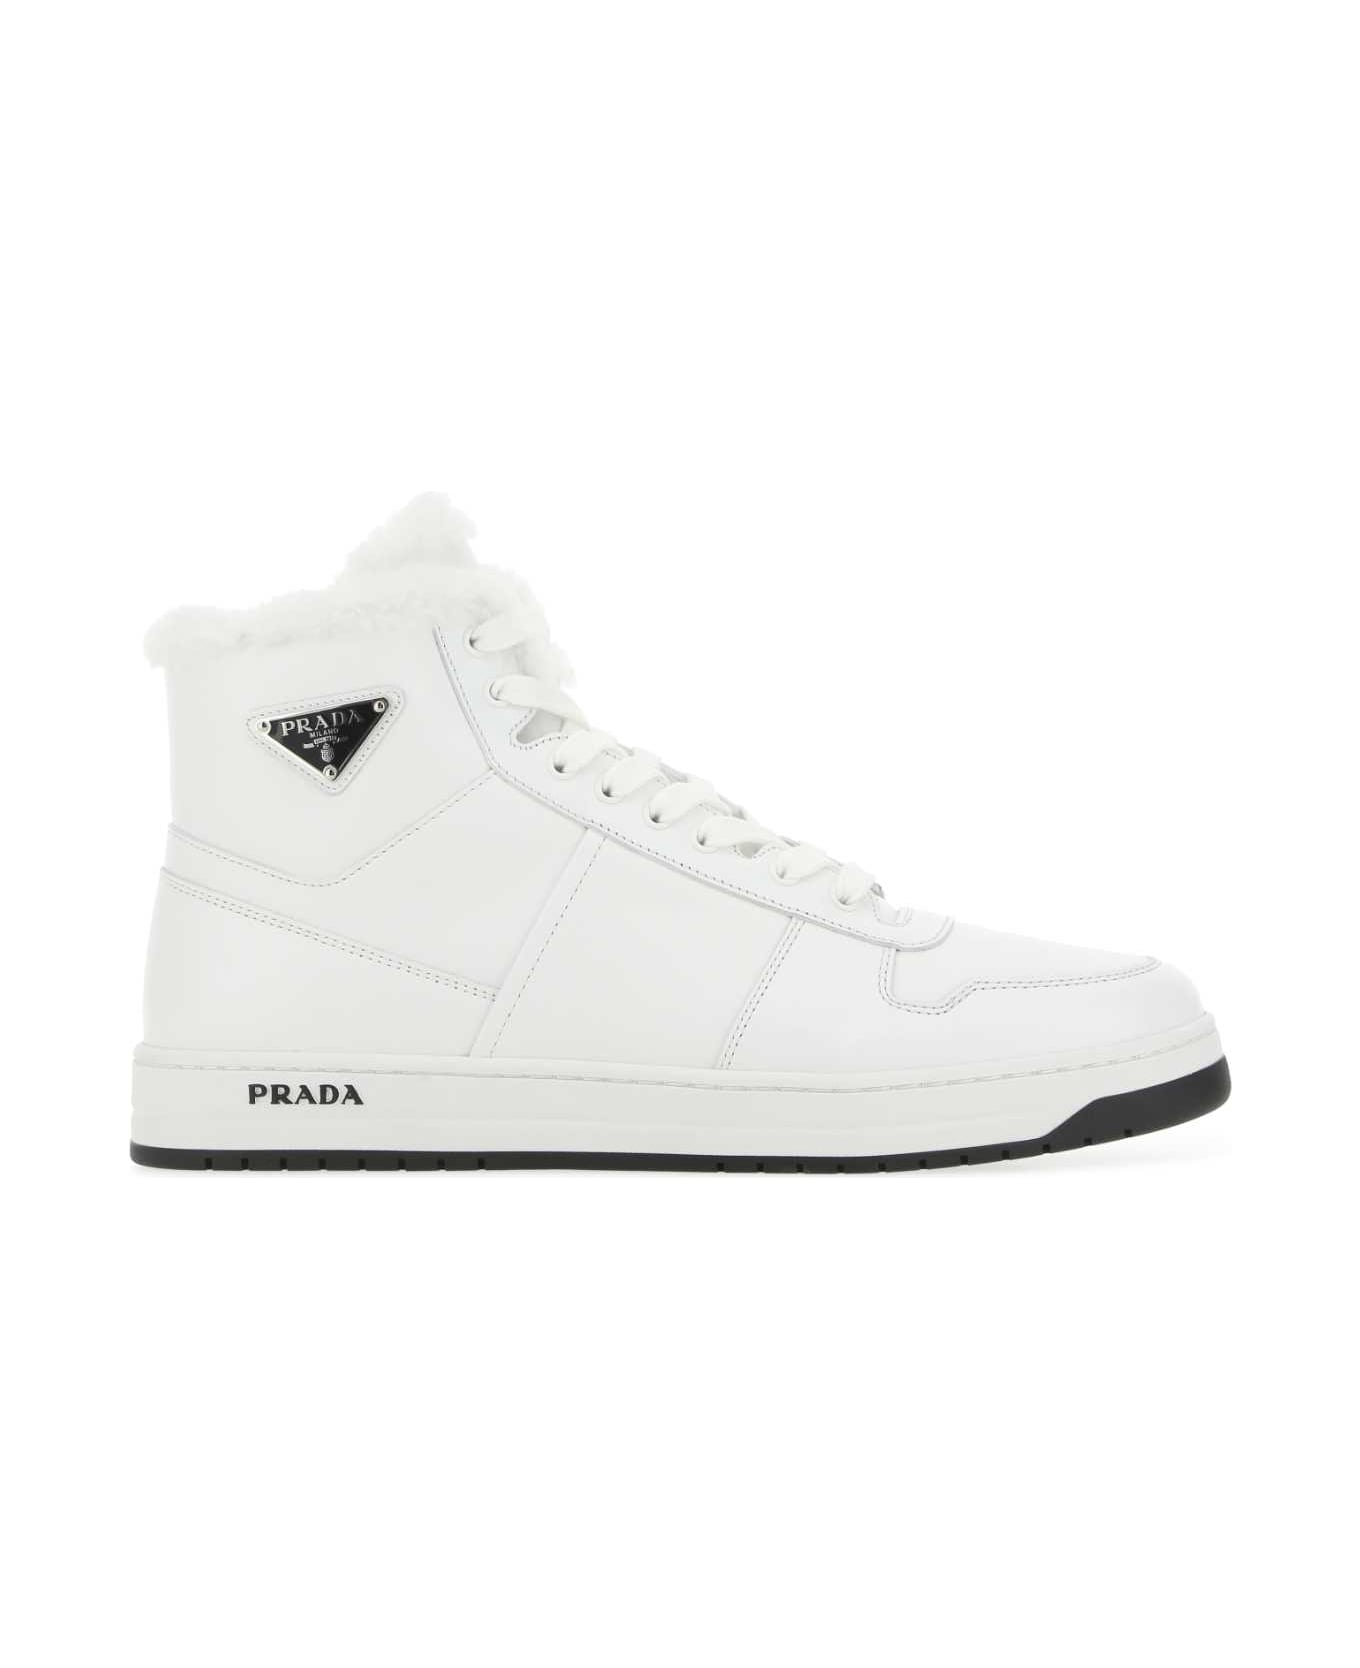 Prada White Leather Sneakers - F0009 スニーカー